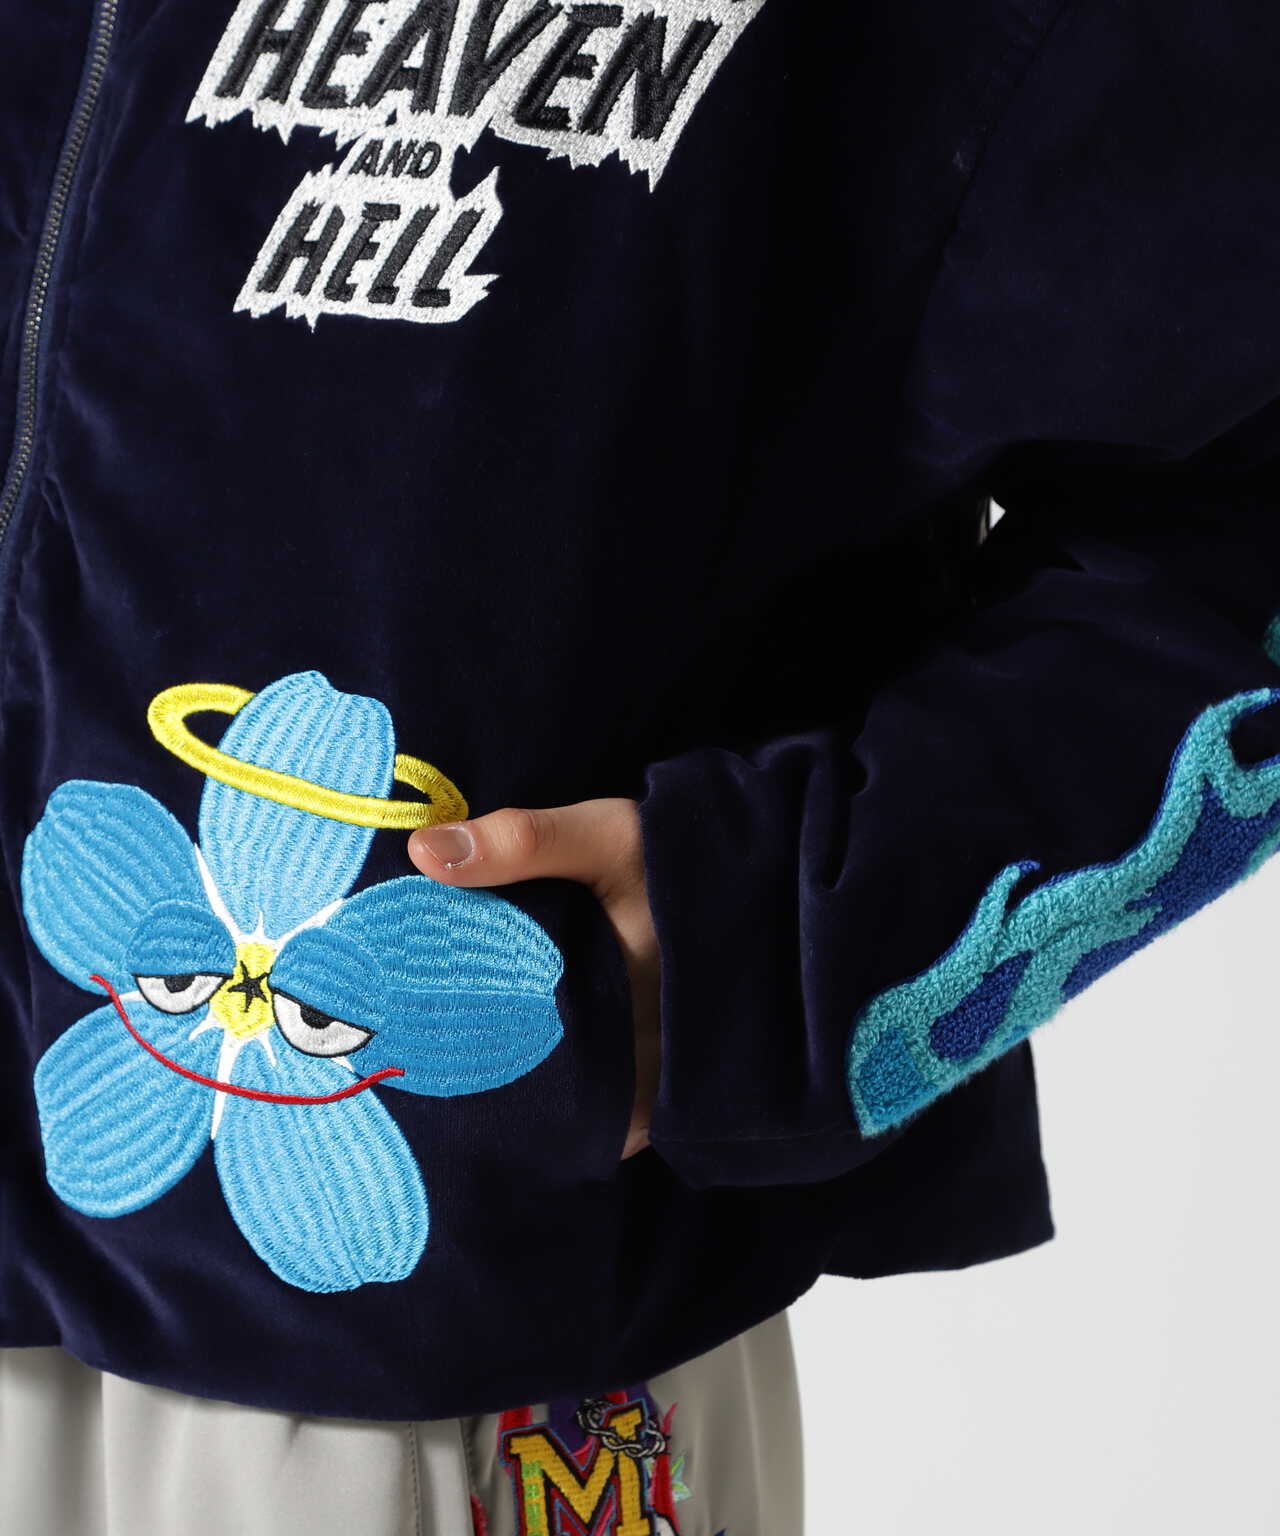 MAYO/メイヨー/ Embroidery Souvenir Harrington Jacket /スーベニア